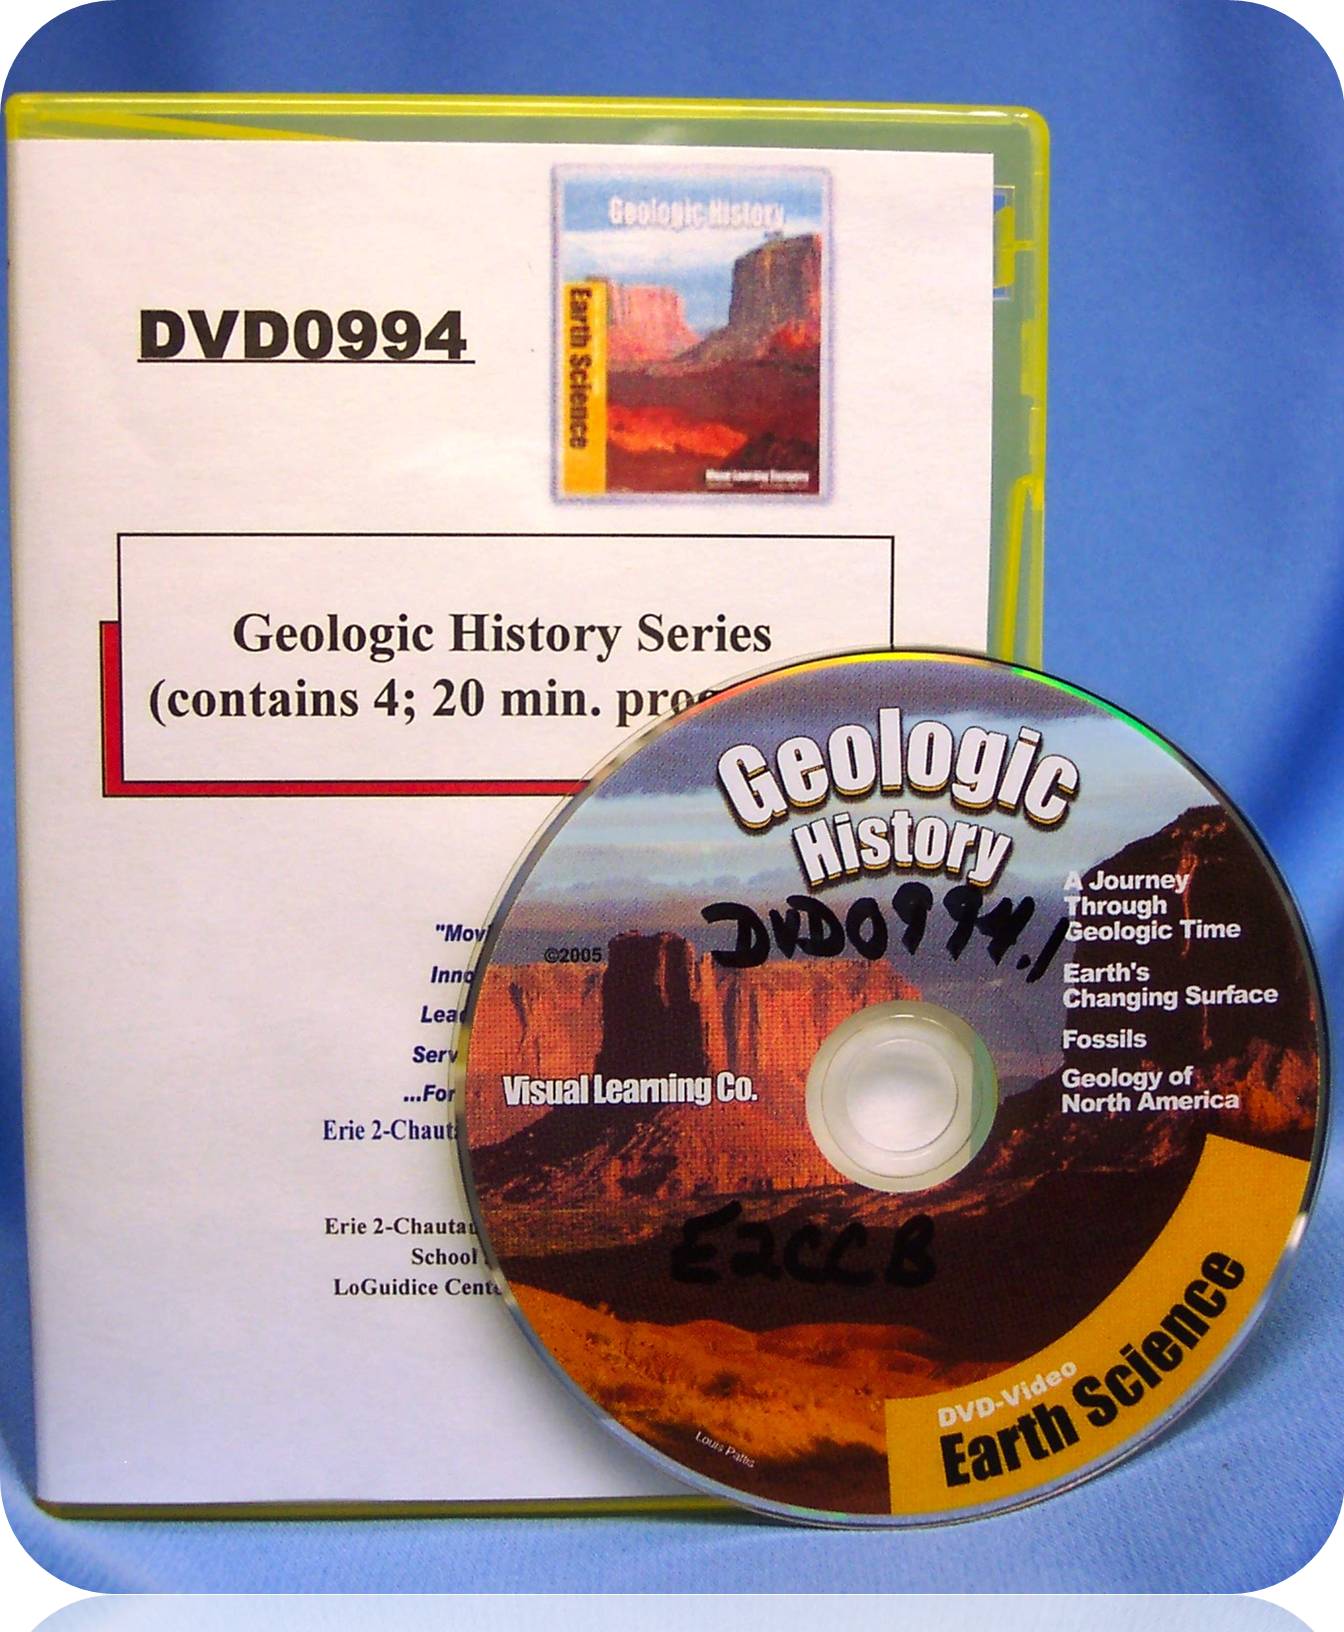 Geologic History Series (contains 4; 20 min. program